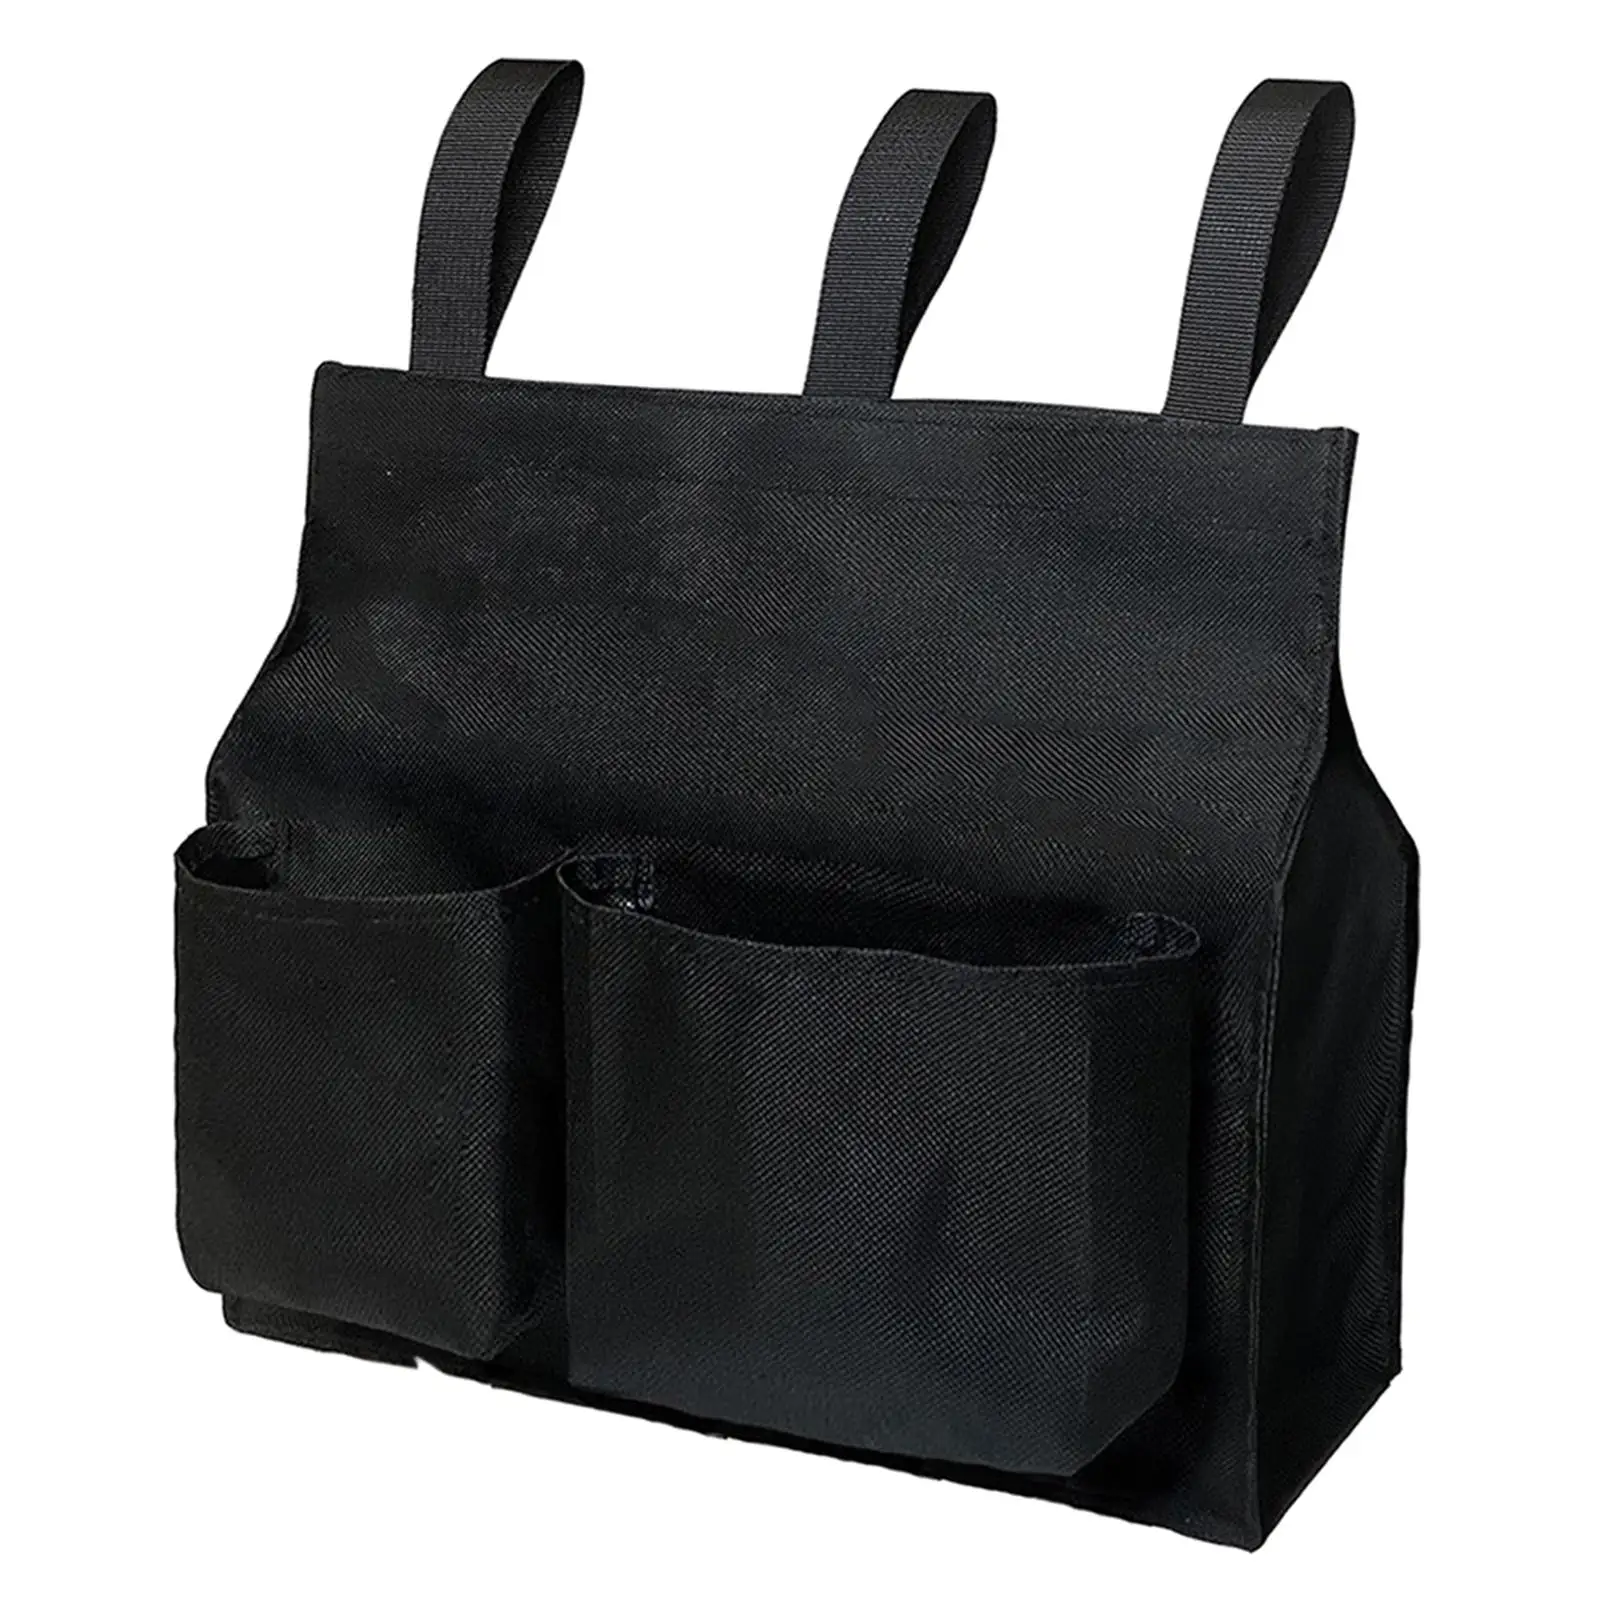 Softball Umpire Ball Bag Wear Resistant Durable with Pockets Oxford Fabric Black Umpire Equipment for Baseball Softball Referee